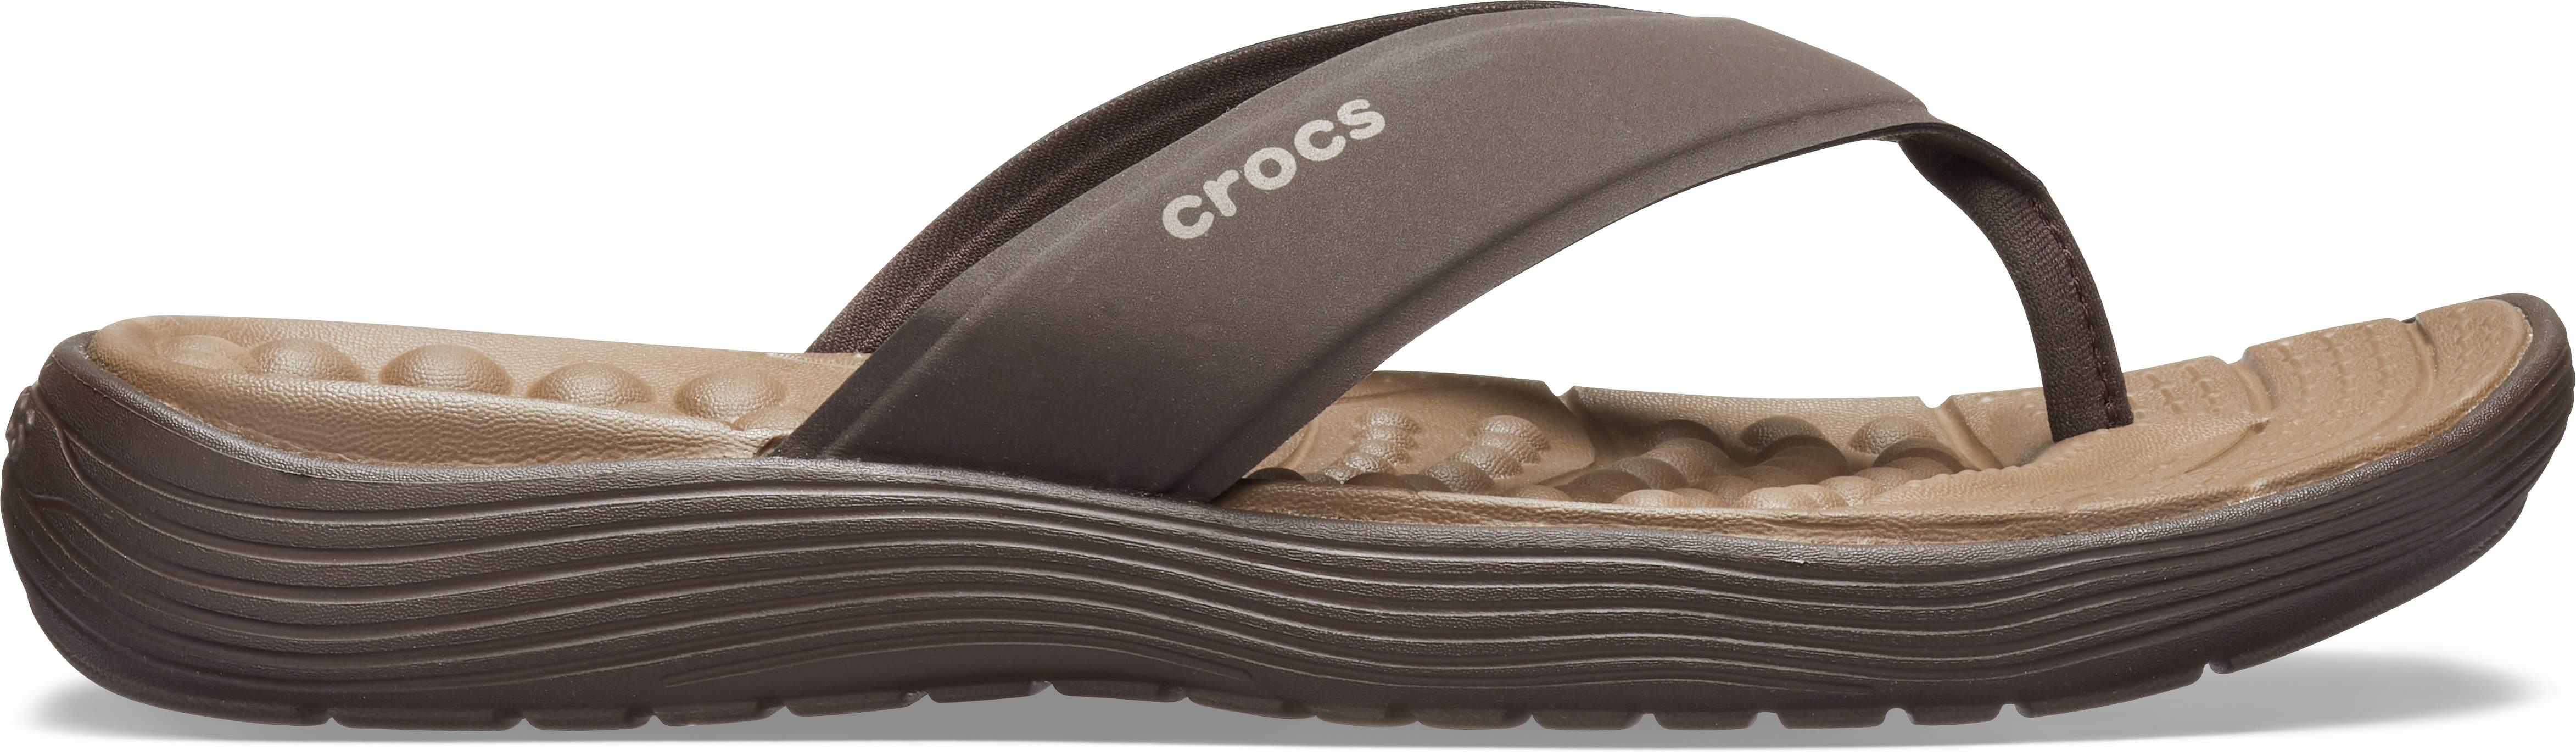 crocs reviva slide